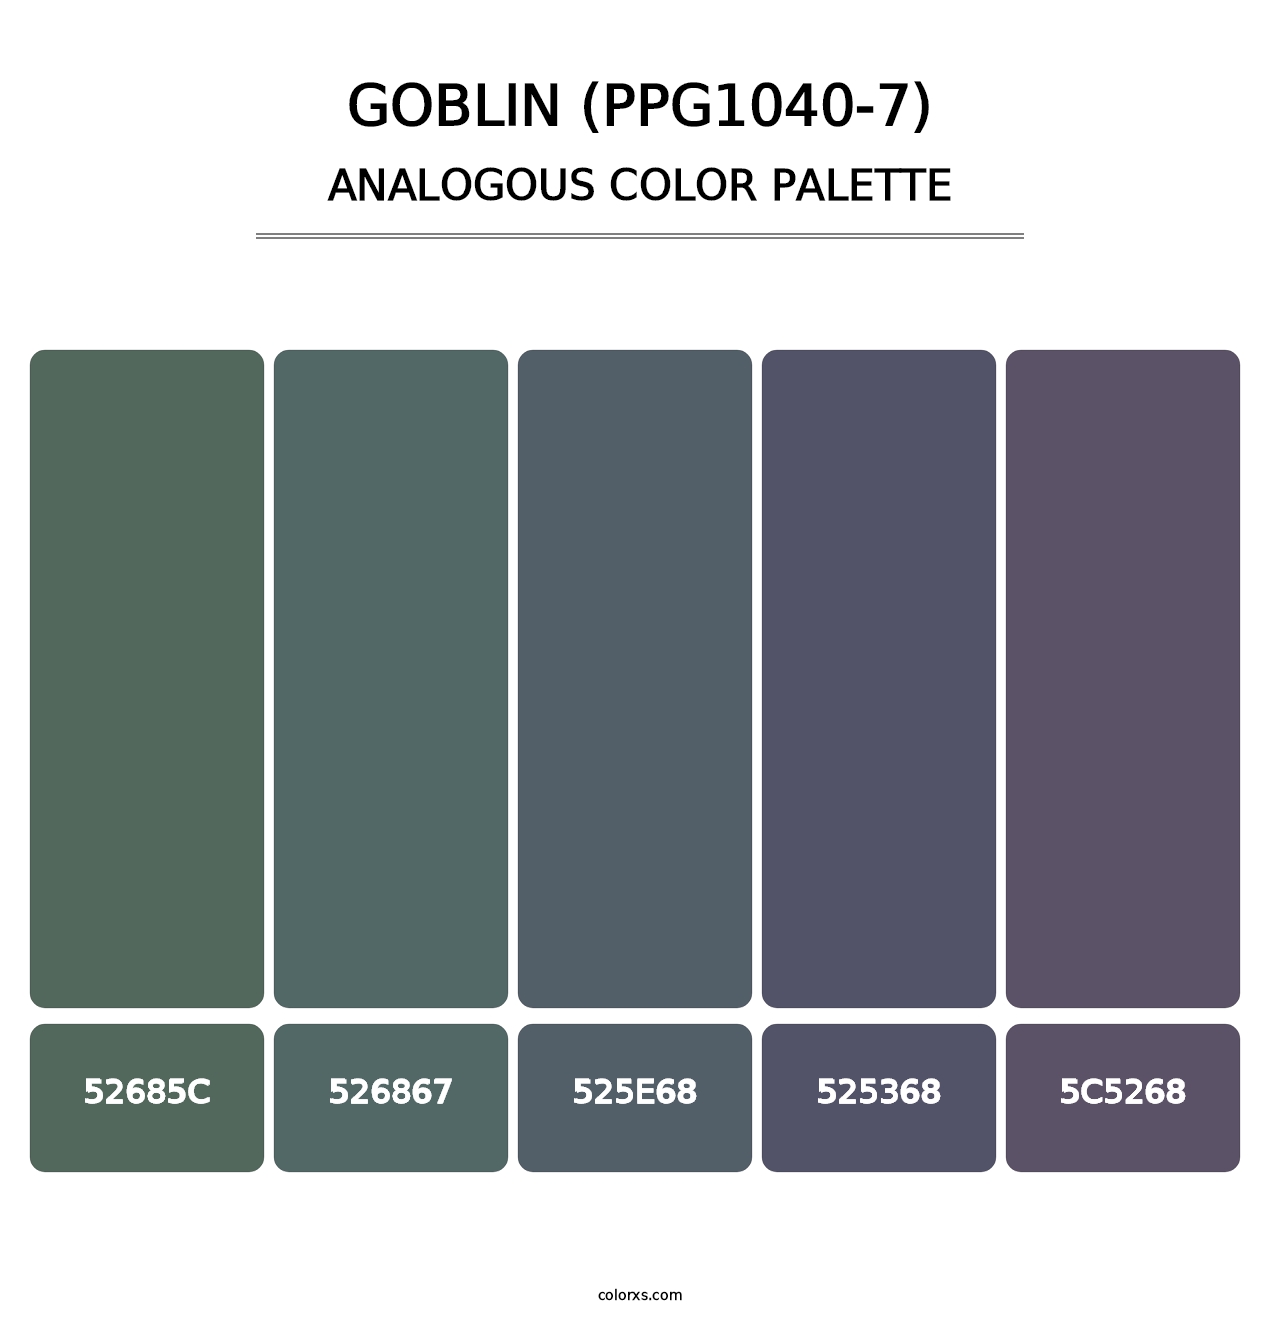 Goblin (PPG1040-7) - Analogous Color Palette